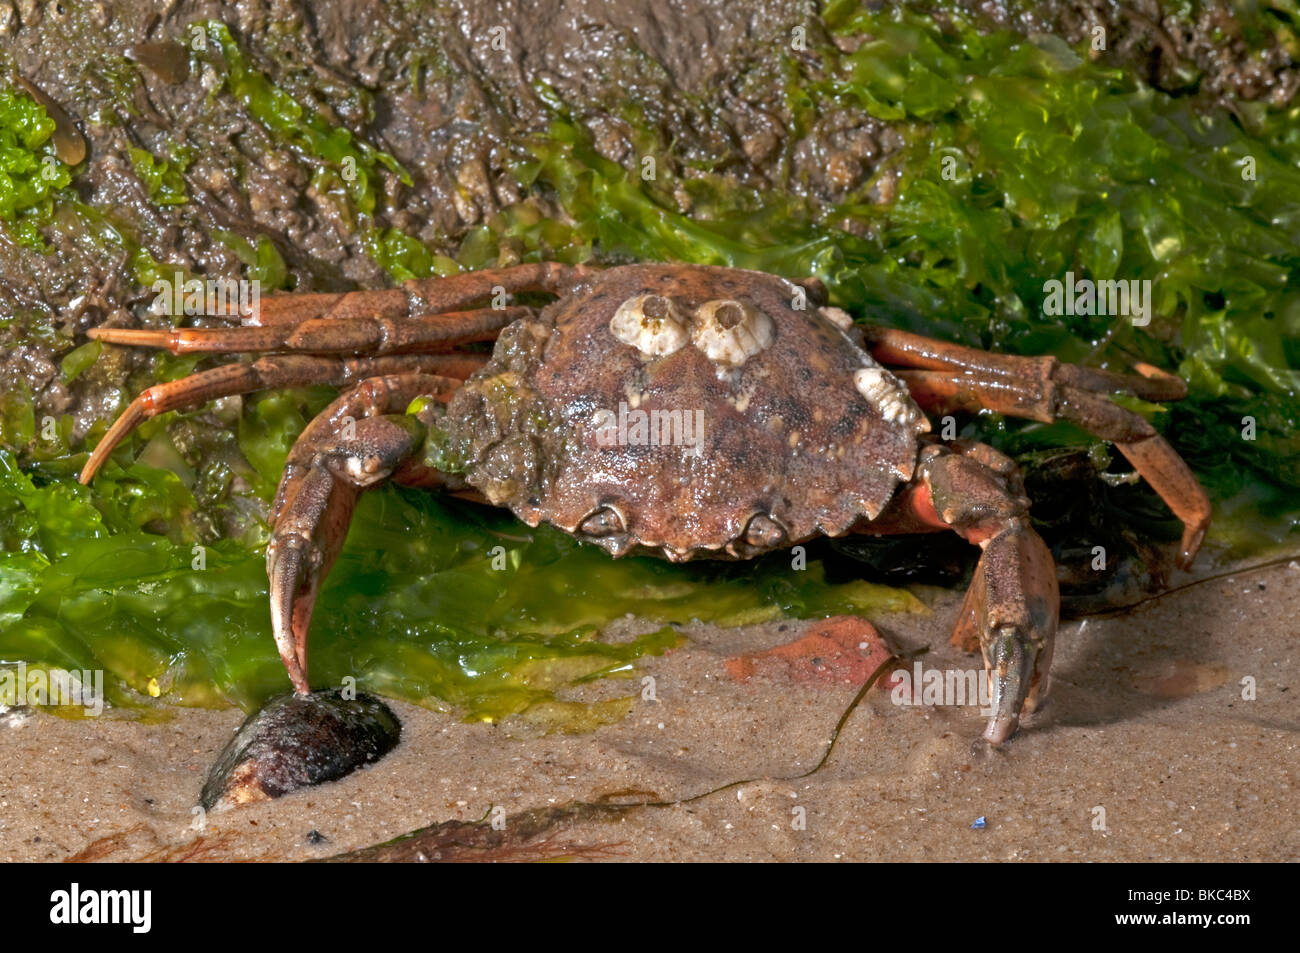 Green Shore Crab, Green Crab, North Atlantic Shore Crab (Carcinus maenas) at low tide. Stock Photo